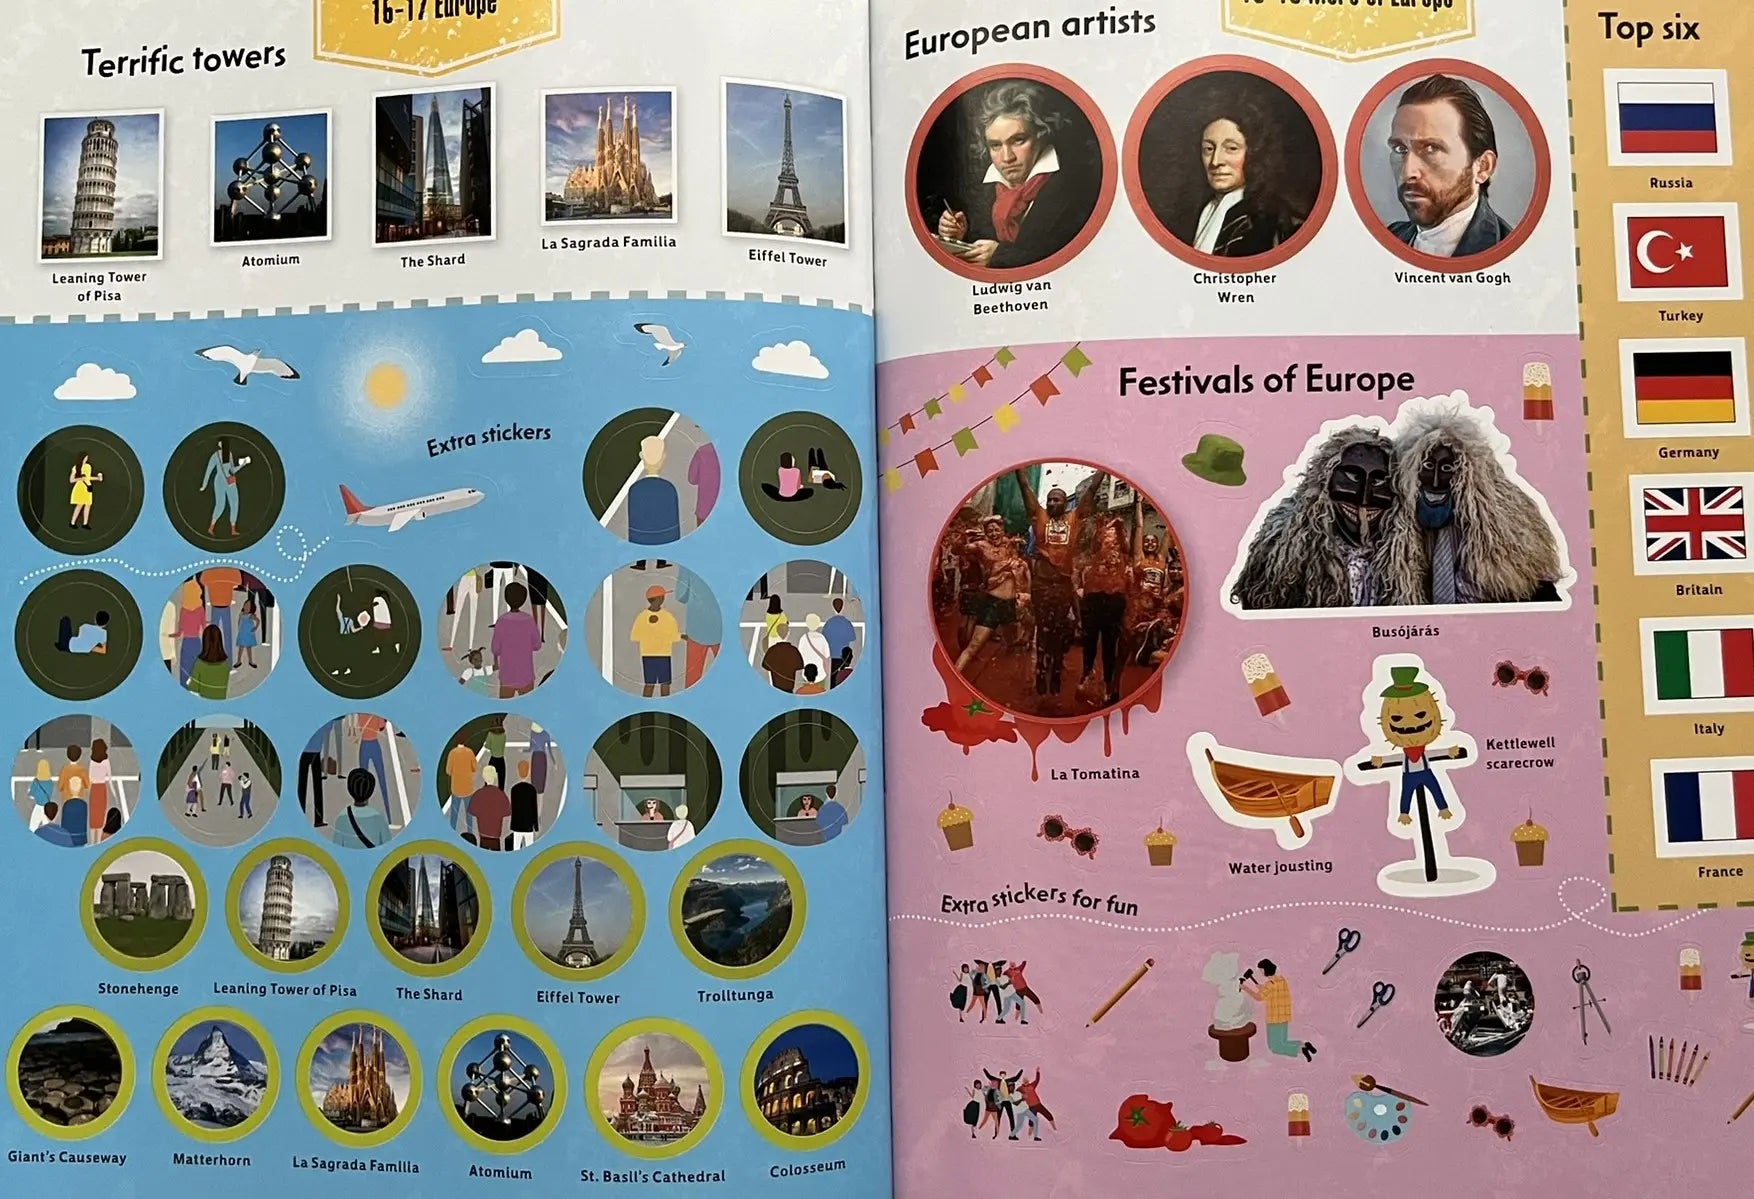 Sticker Encyclopedia Around the World